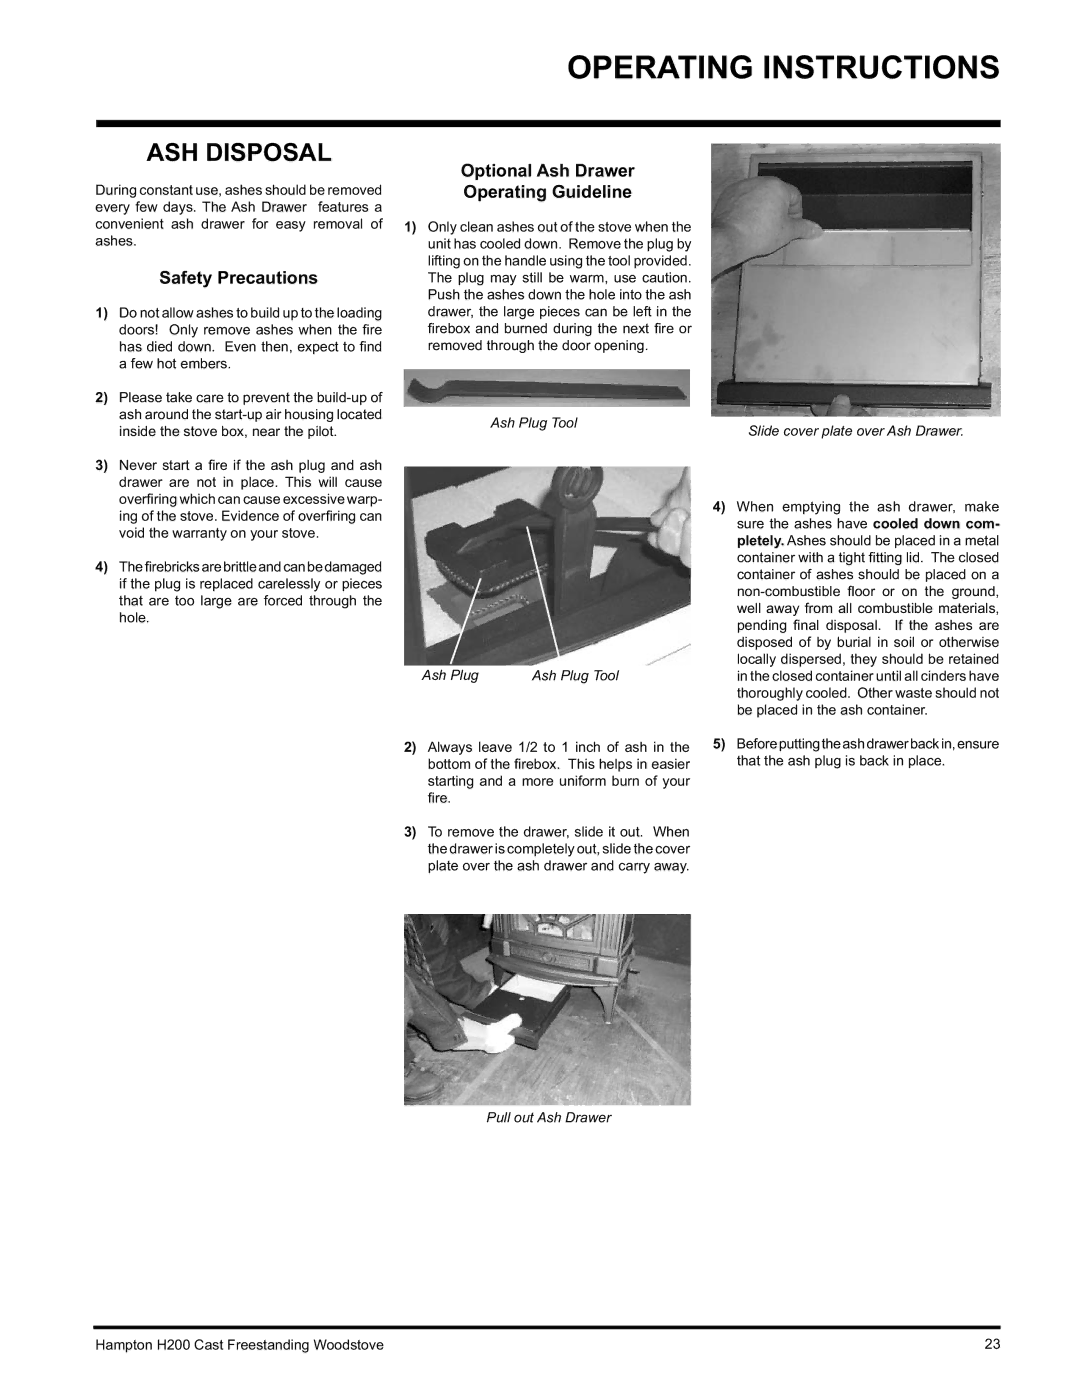 Hampton Direct H200 installation manual ASH Disposal, Safety Precautions, Optional Ash Drawer Operating Guideline 